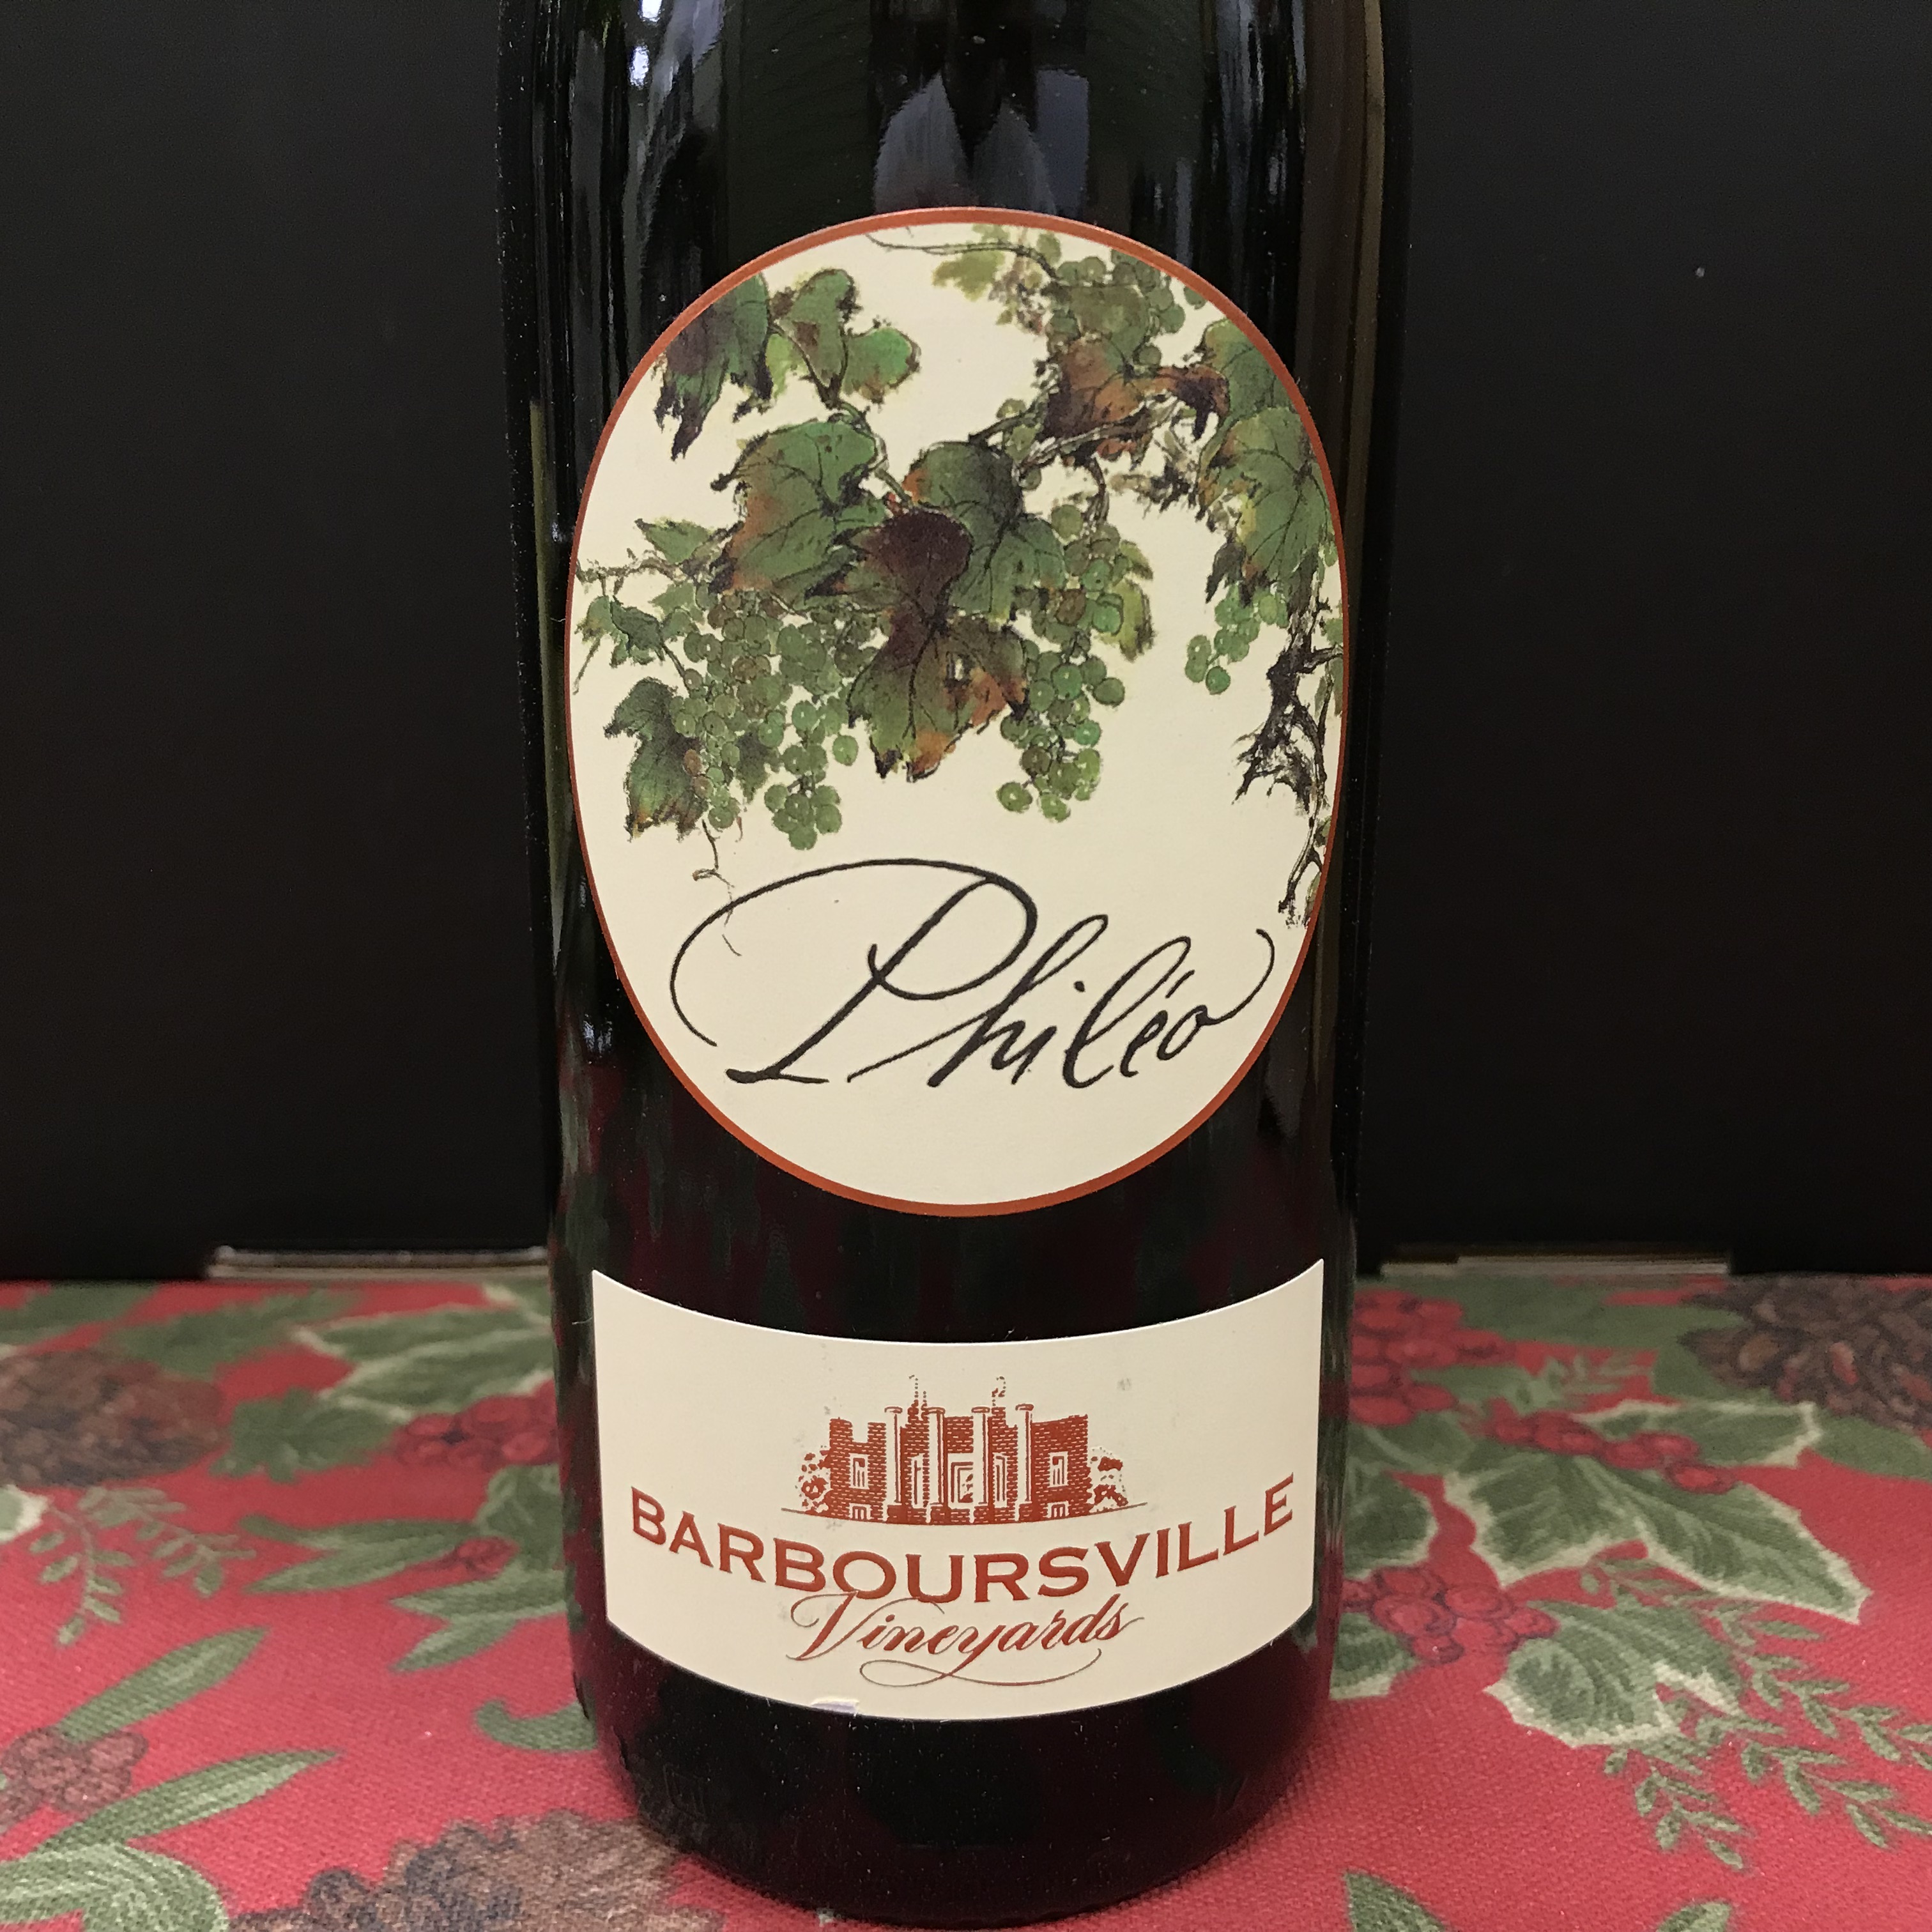 Barboursville Vineyards Phileo desert wine